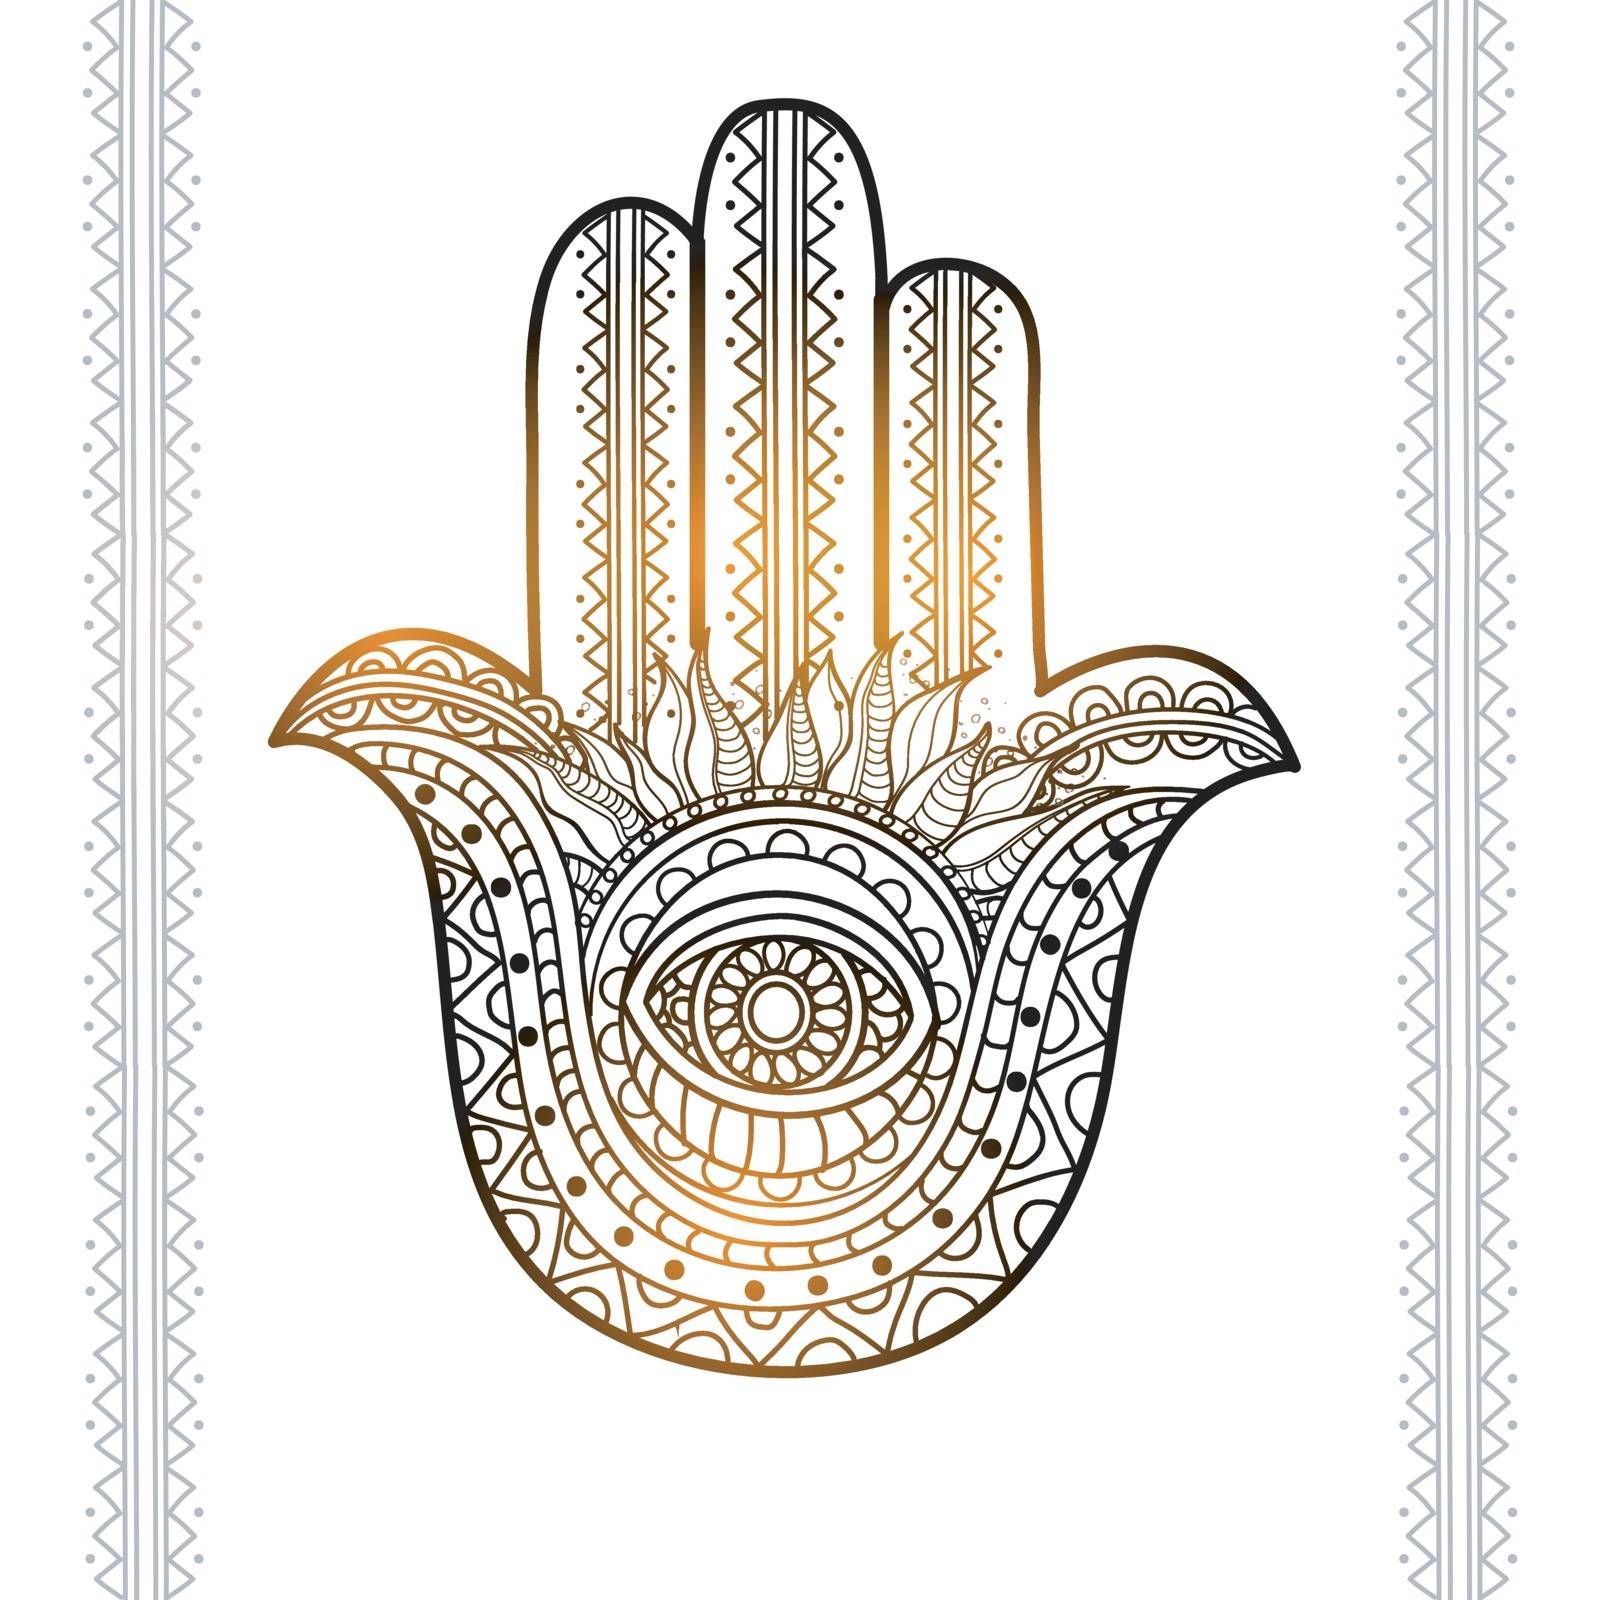 Glossy hand drawn illustration of Hamsa Hand with ethnic ornamental pattern, Creative Boho style element.